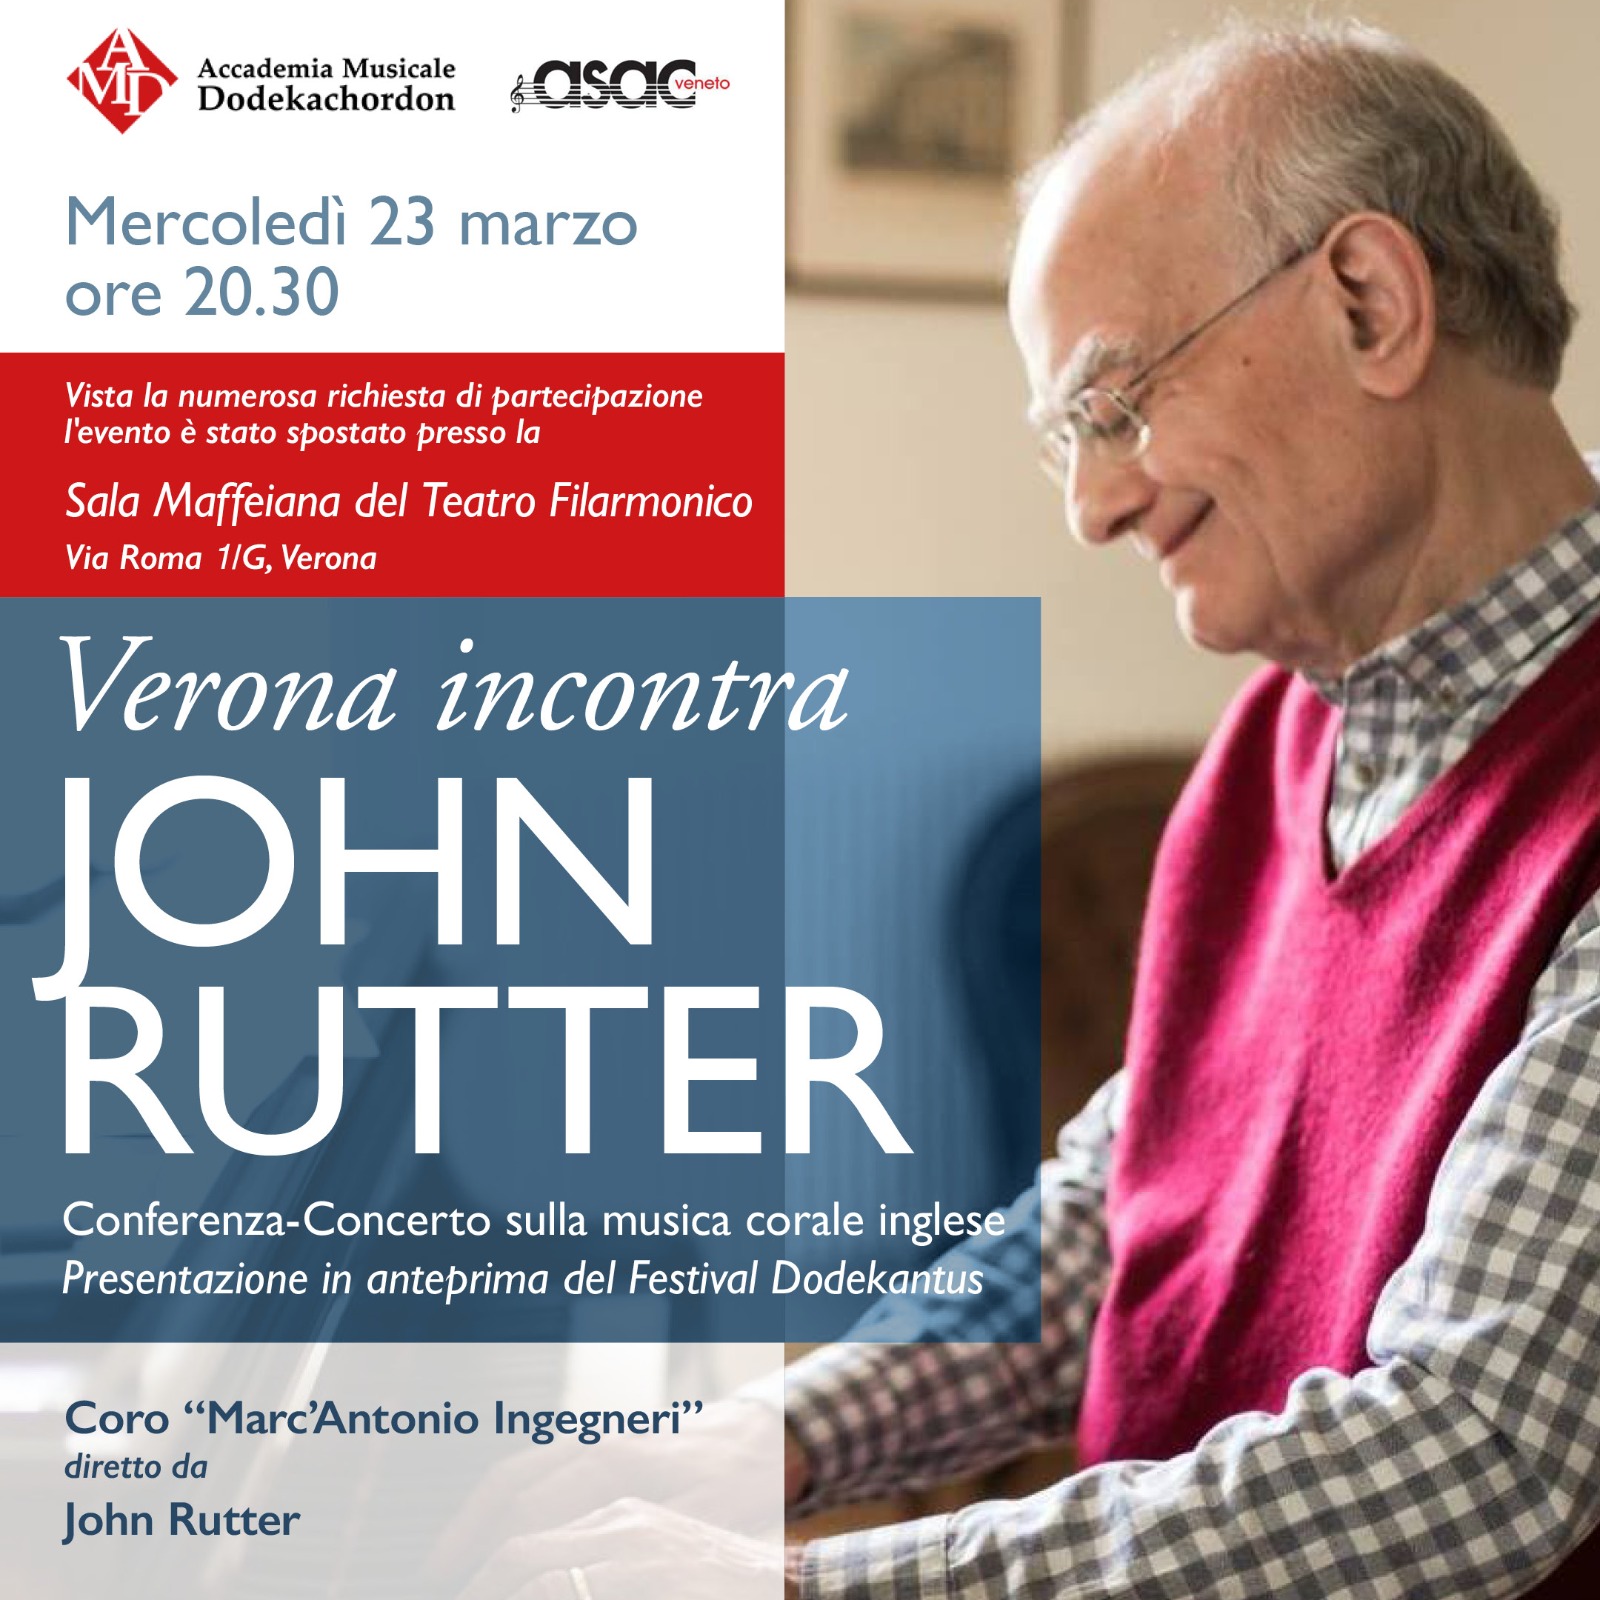 Verona incontra JOHN RUTTER